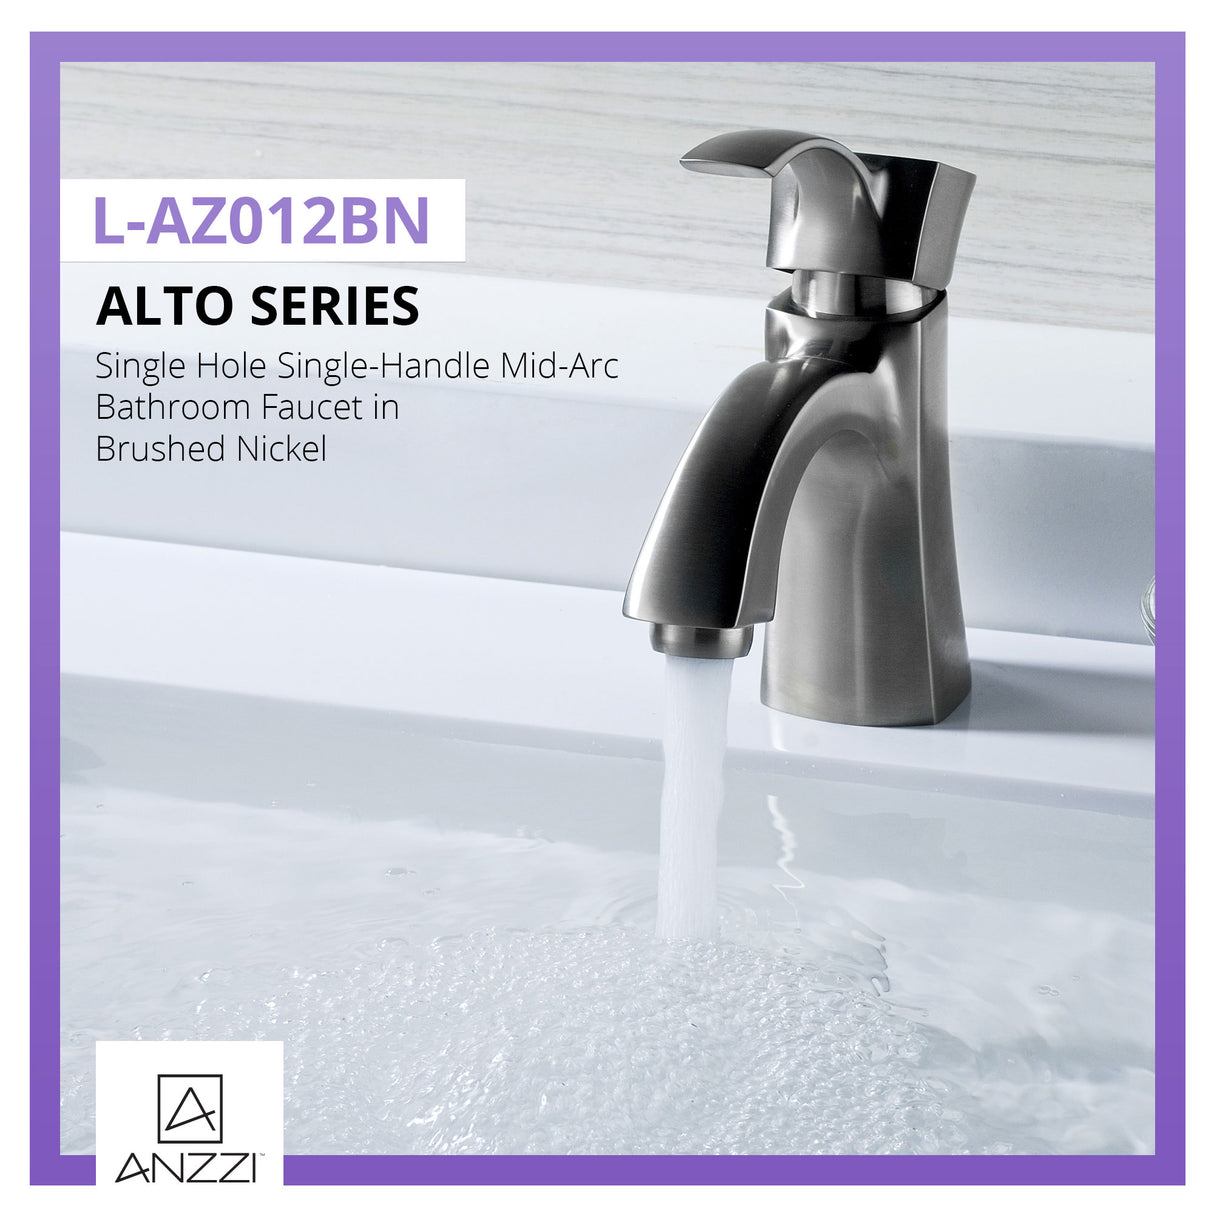 ANZZI L-AZ012BN Alto Series Single Hole Single-Handle Mid-Arc Bathroom Faucet in Brushed Nickel